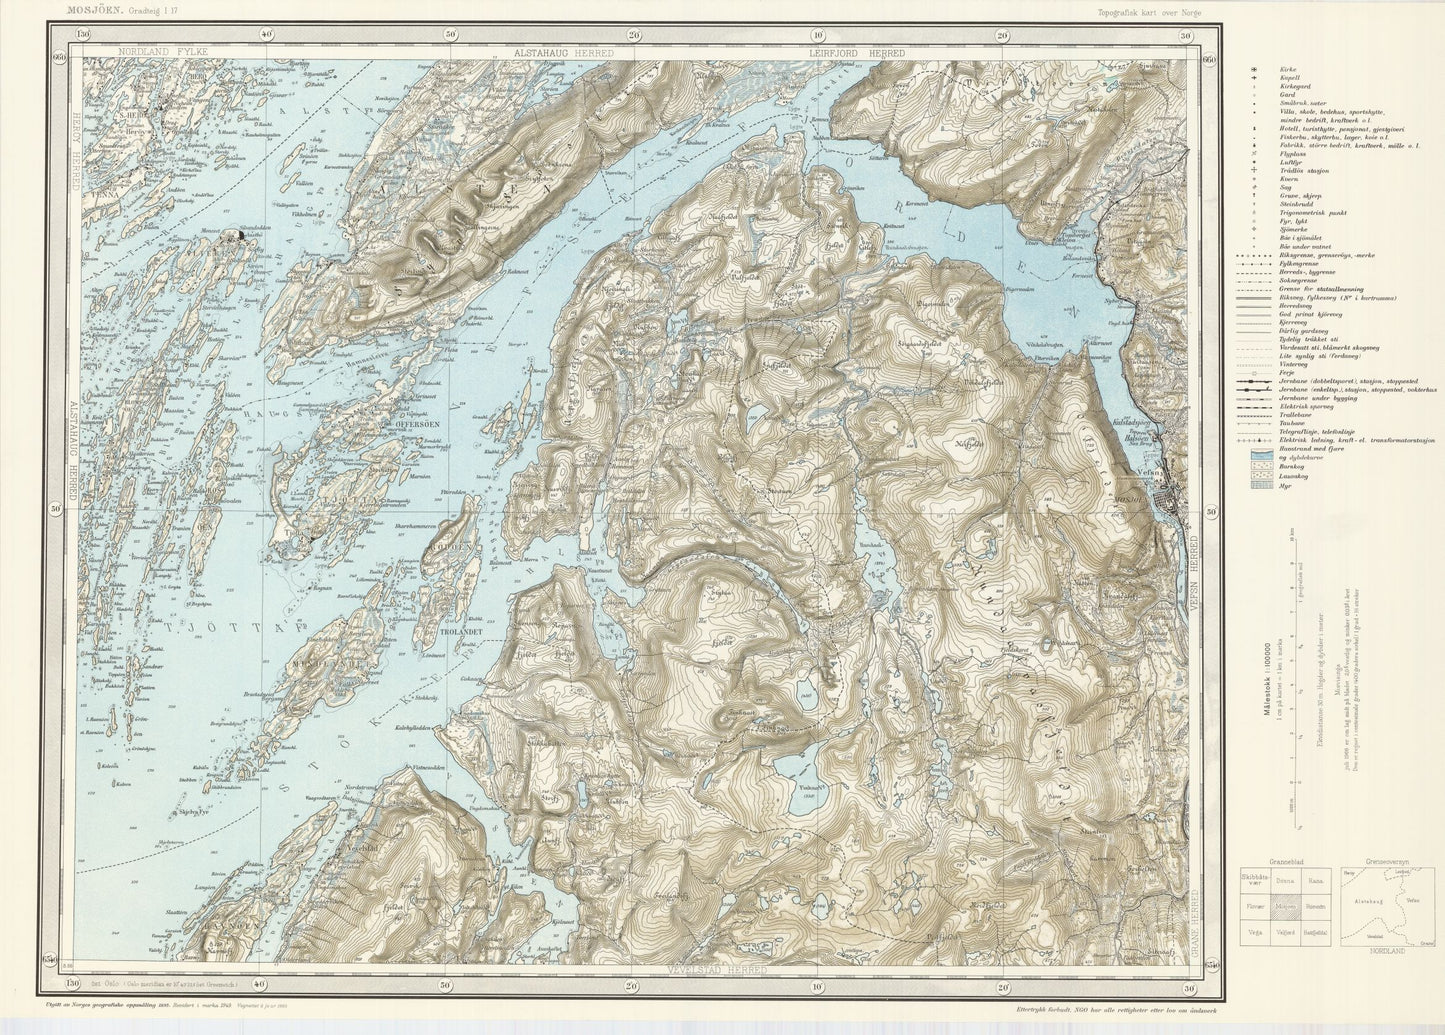 I17 Mosjøen: Nordland